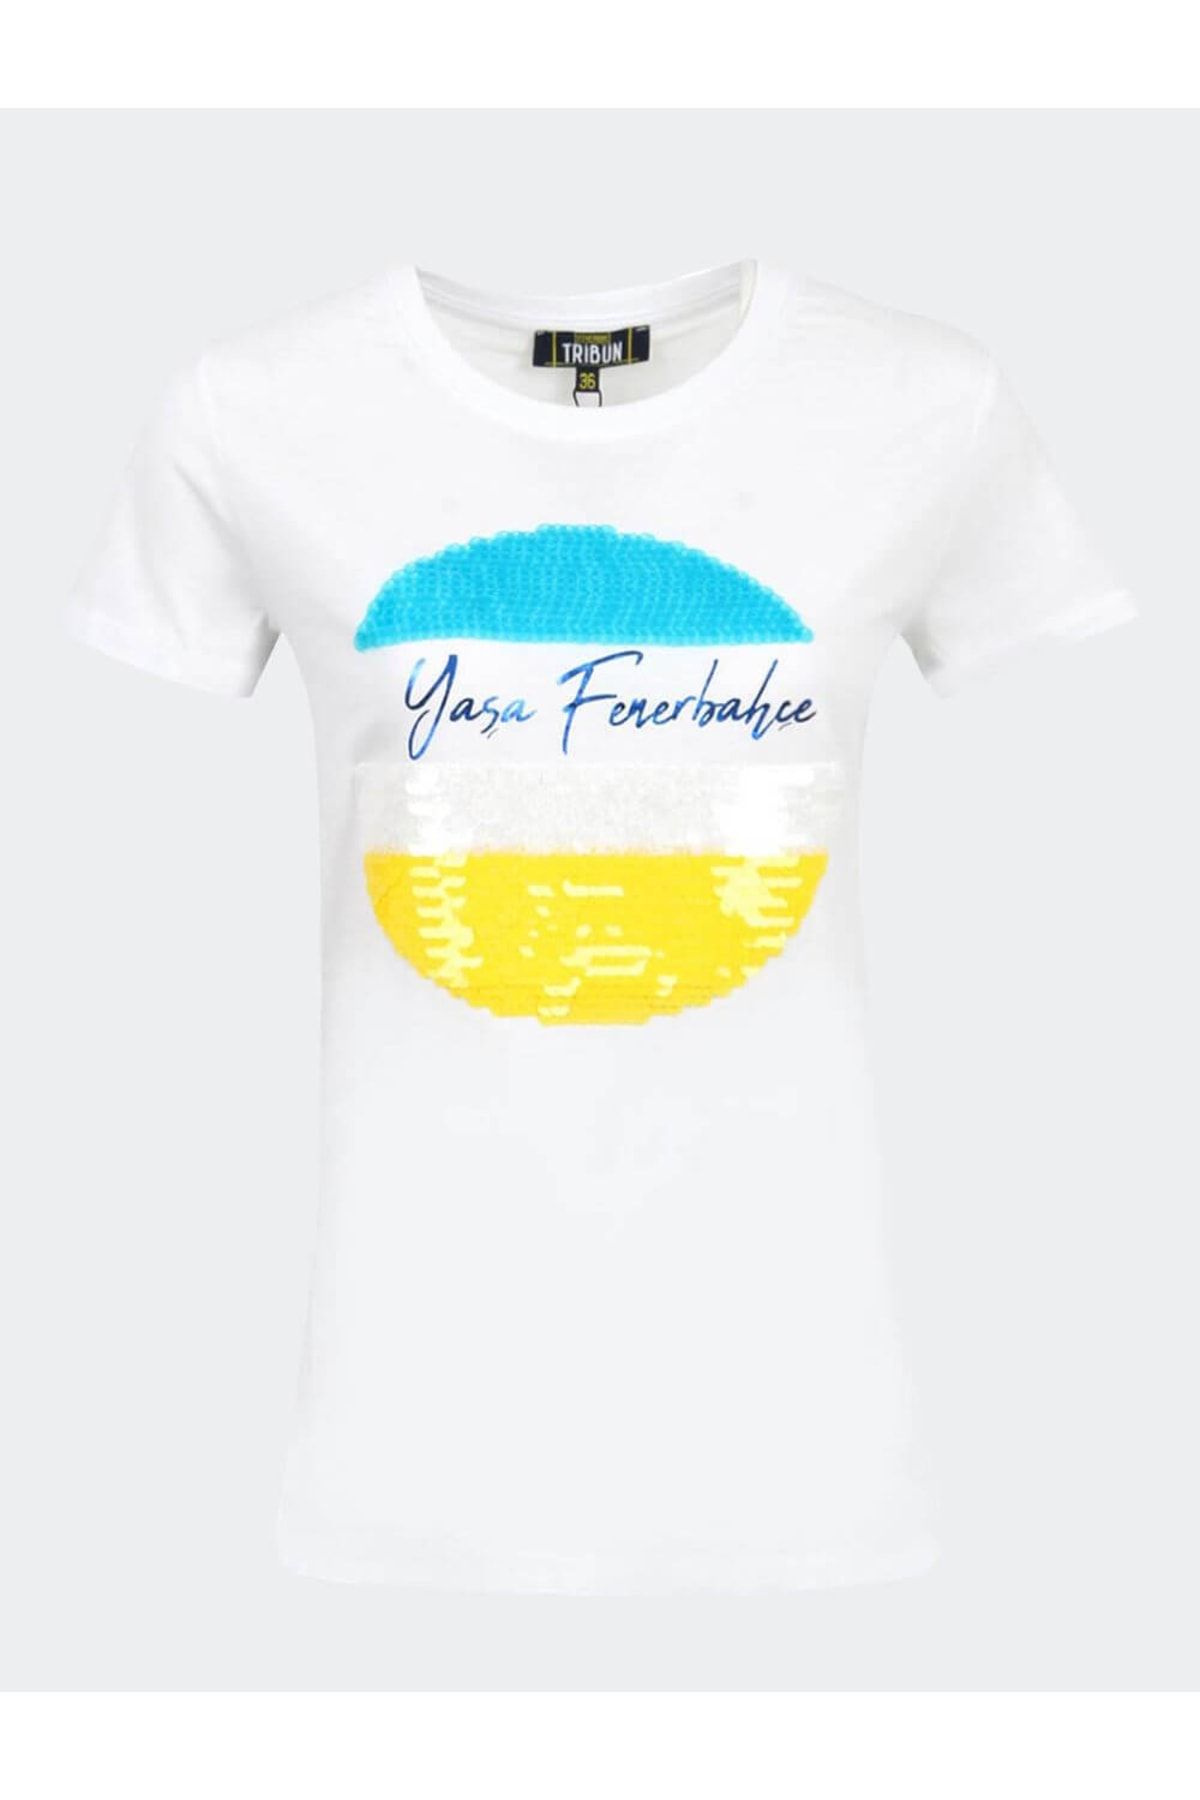 Fenerbahçe KADIN TRIBUN YAŞA T-Shirt